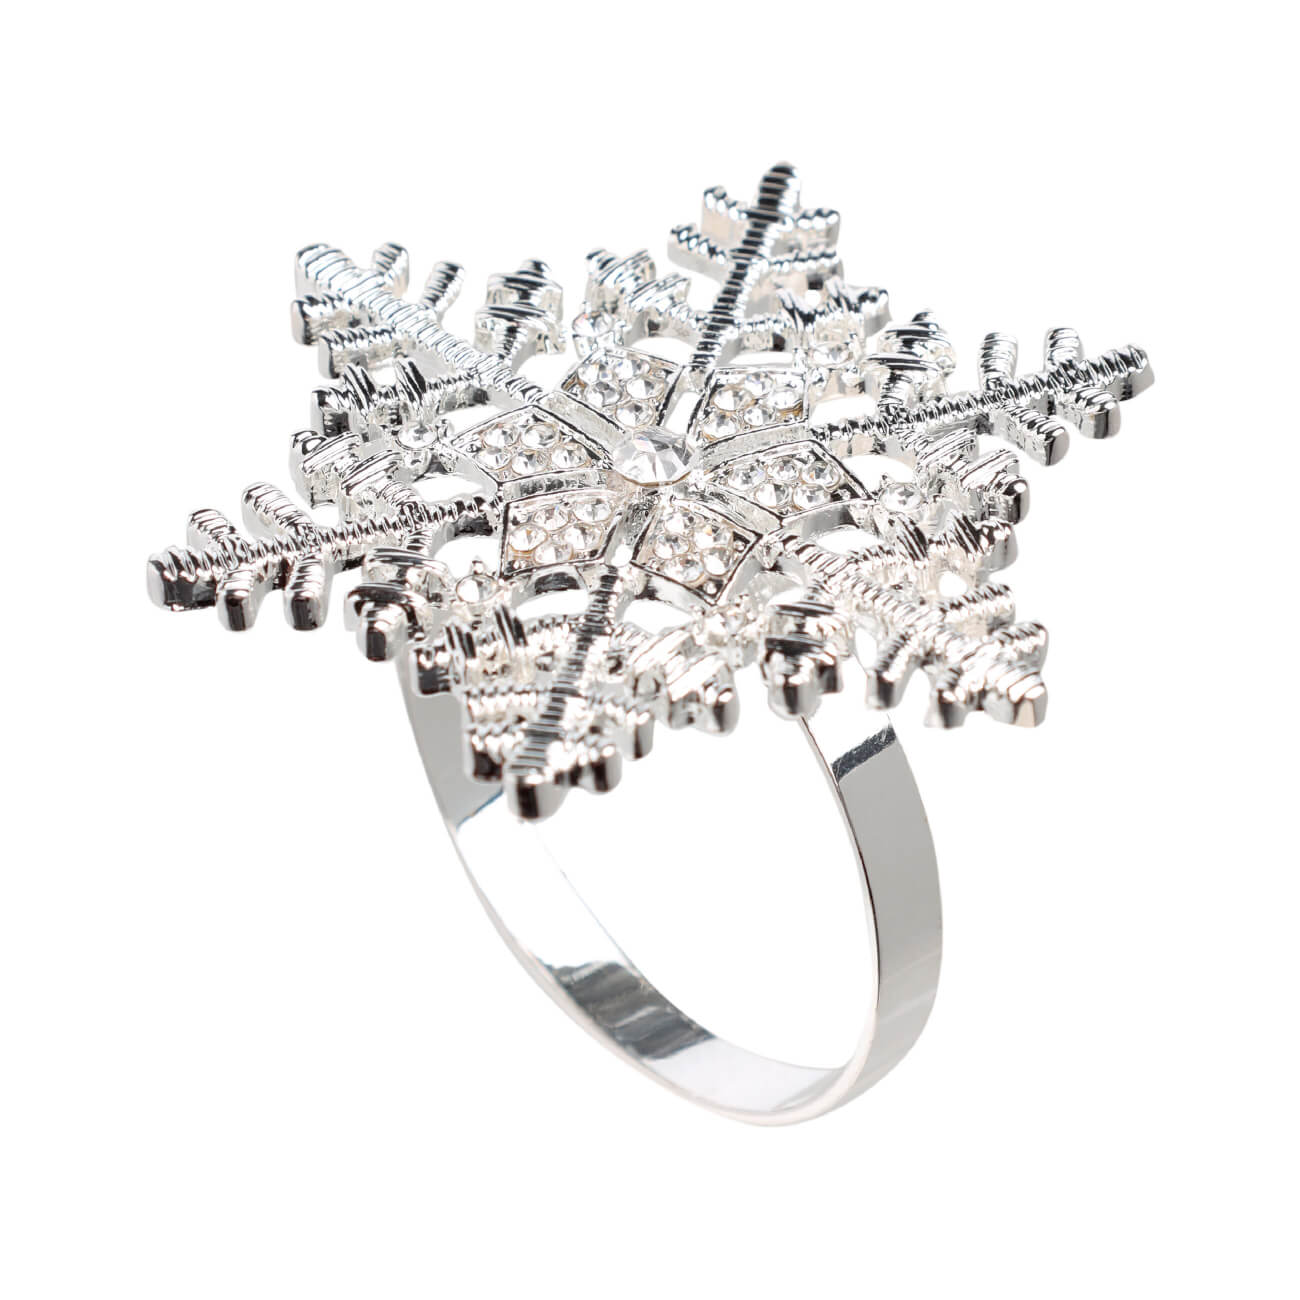 Кольцо для салфеток, 5 см, металл, серебристое, Снежинка, Snowfall кольцо для карниза d 35 38 мм 10 шт серебряный